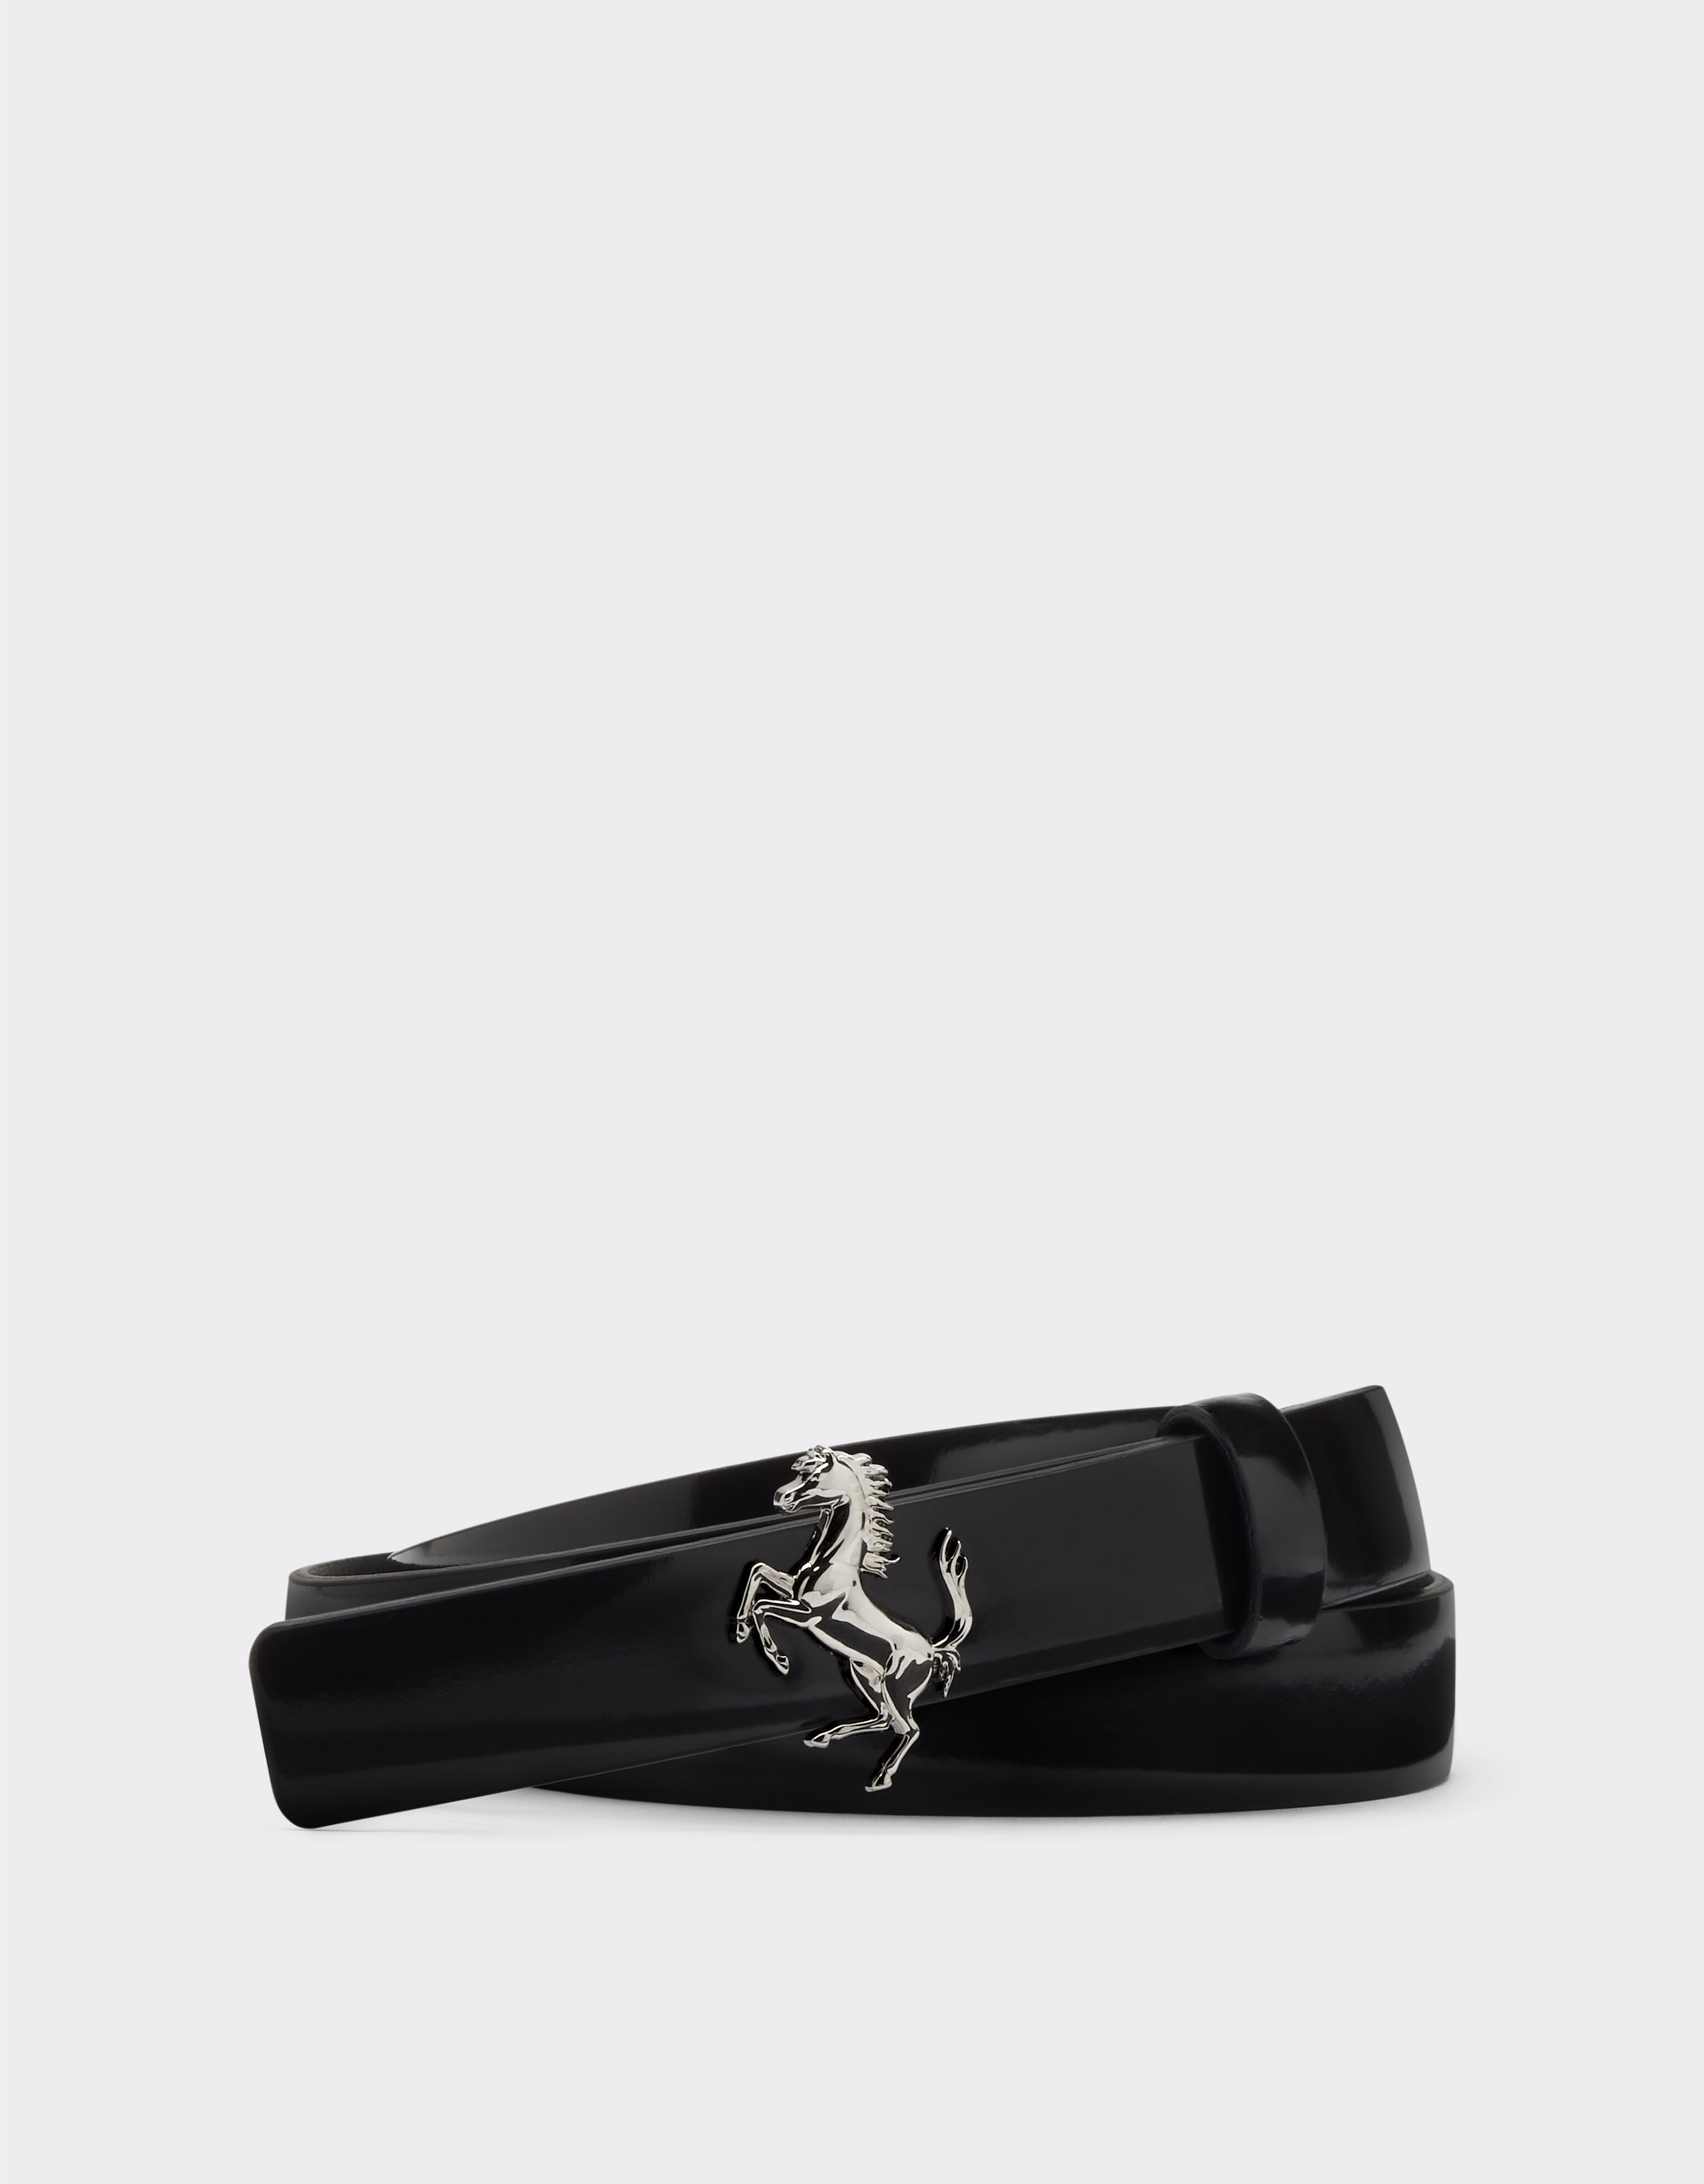 Ferrari Brushed leather belt with Prancing Horse Black 47110f